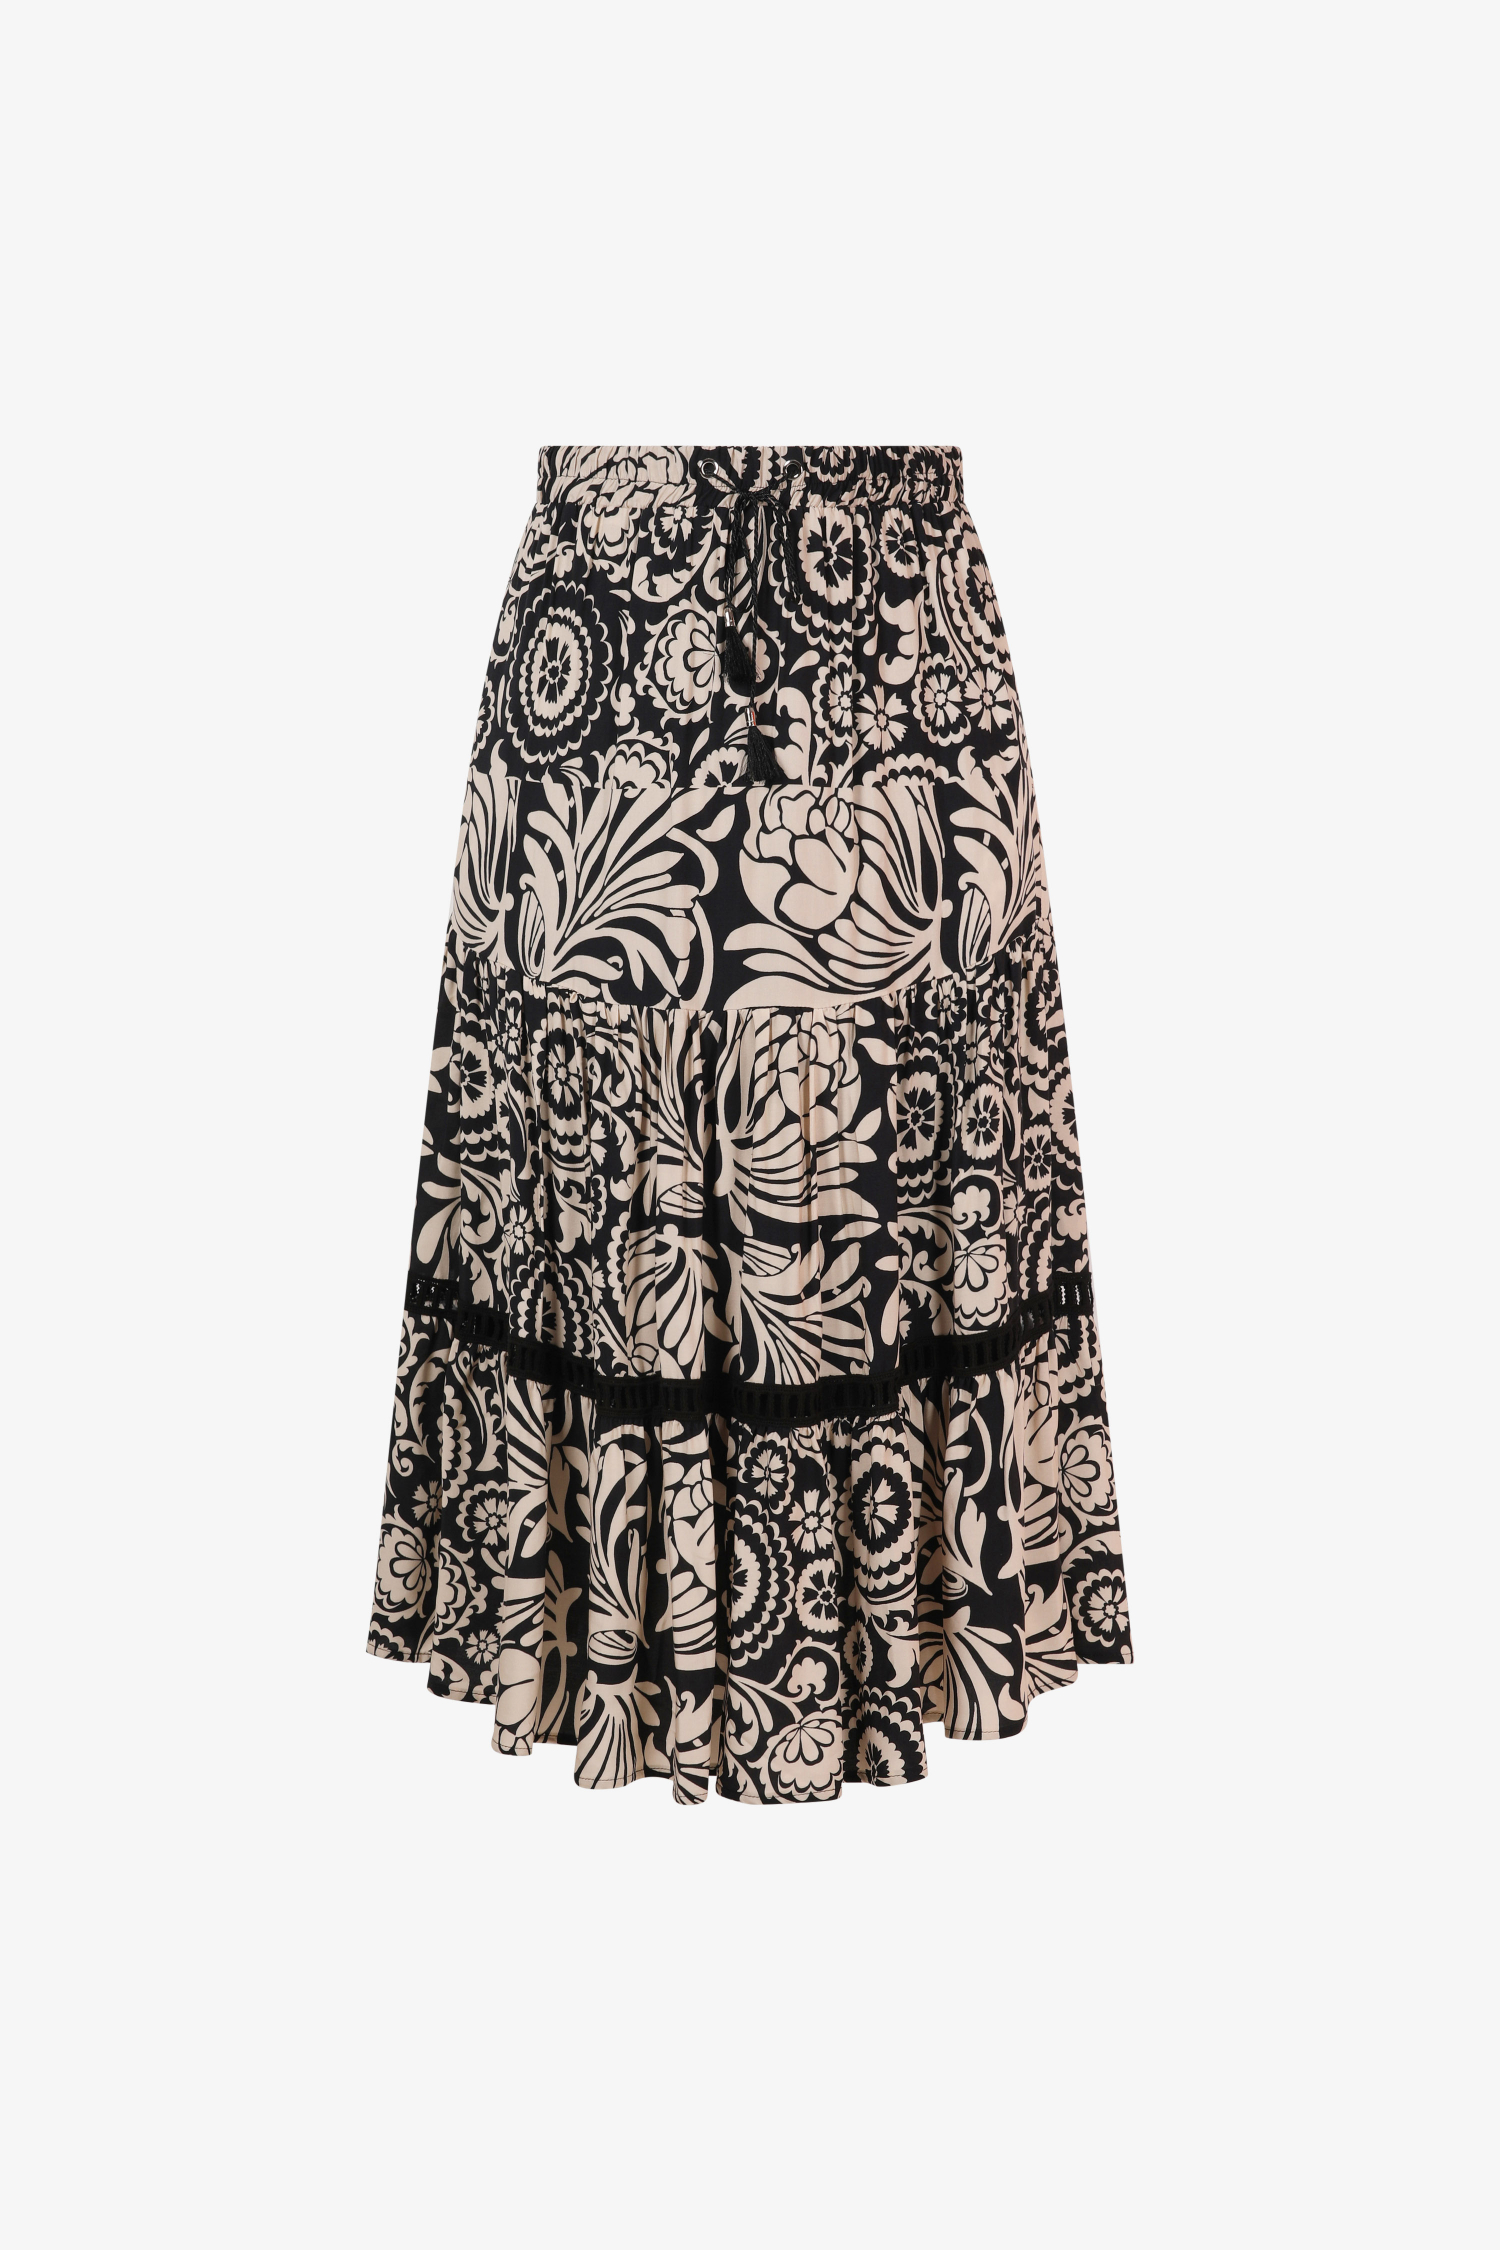 Bohemian style skirt in print.